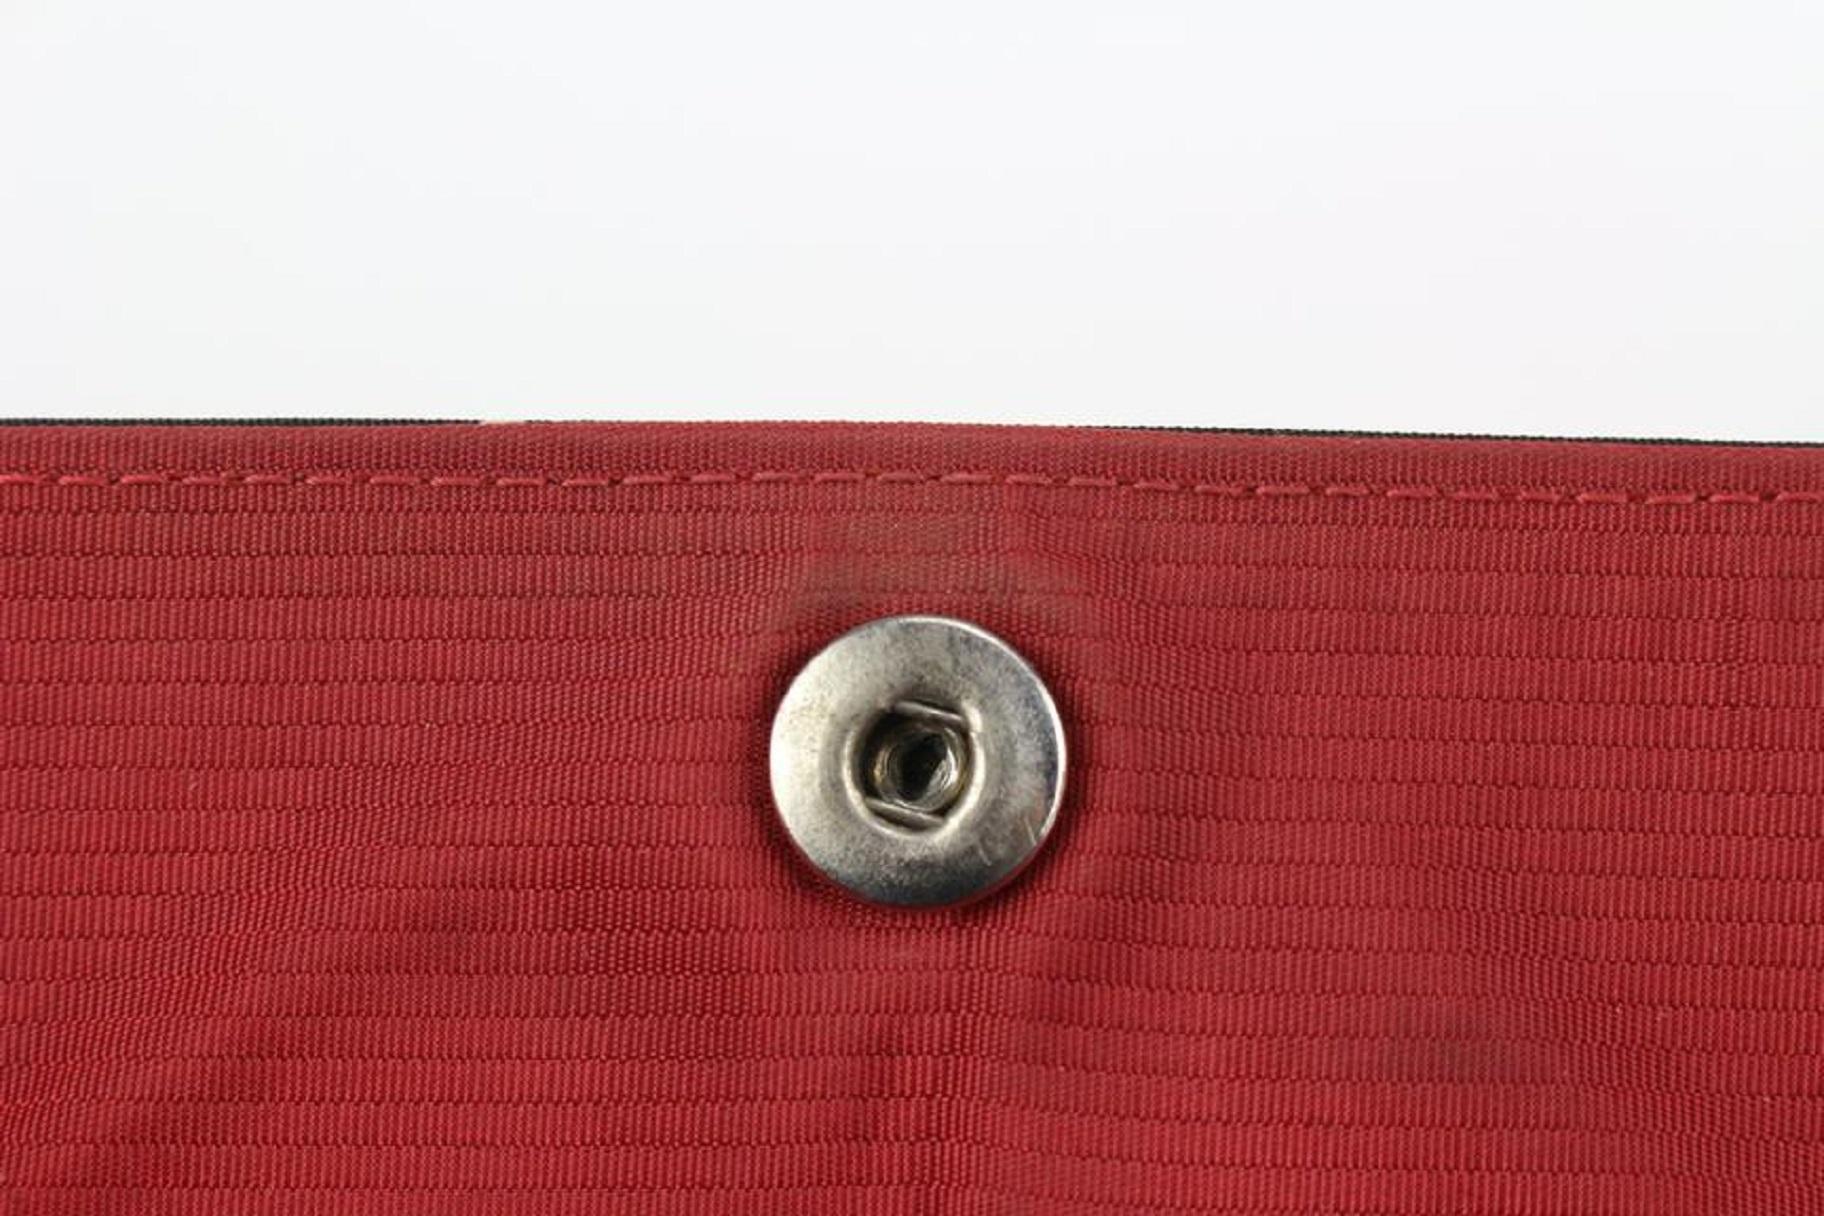 Chanel Black New Lin Belt Bag Fanny Pack Waist Pouch 923ca5 7